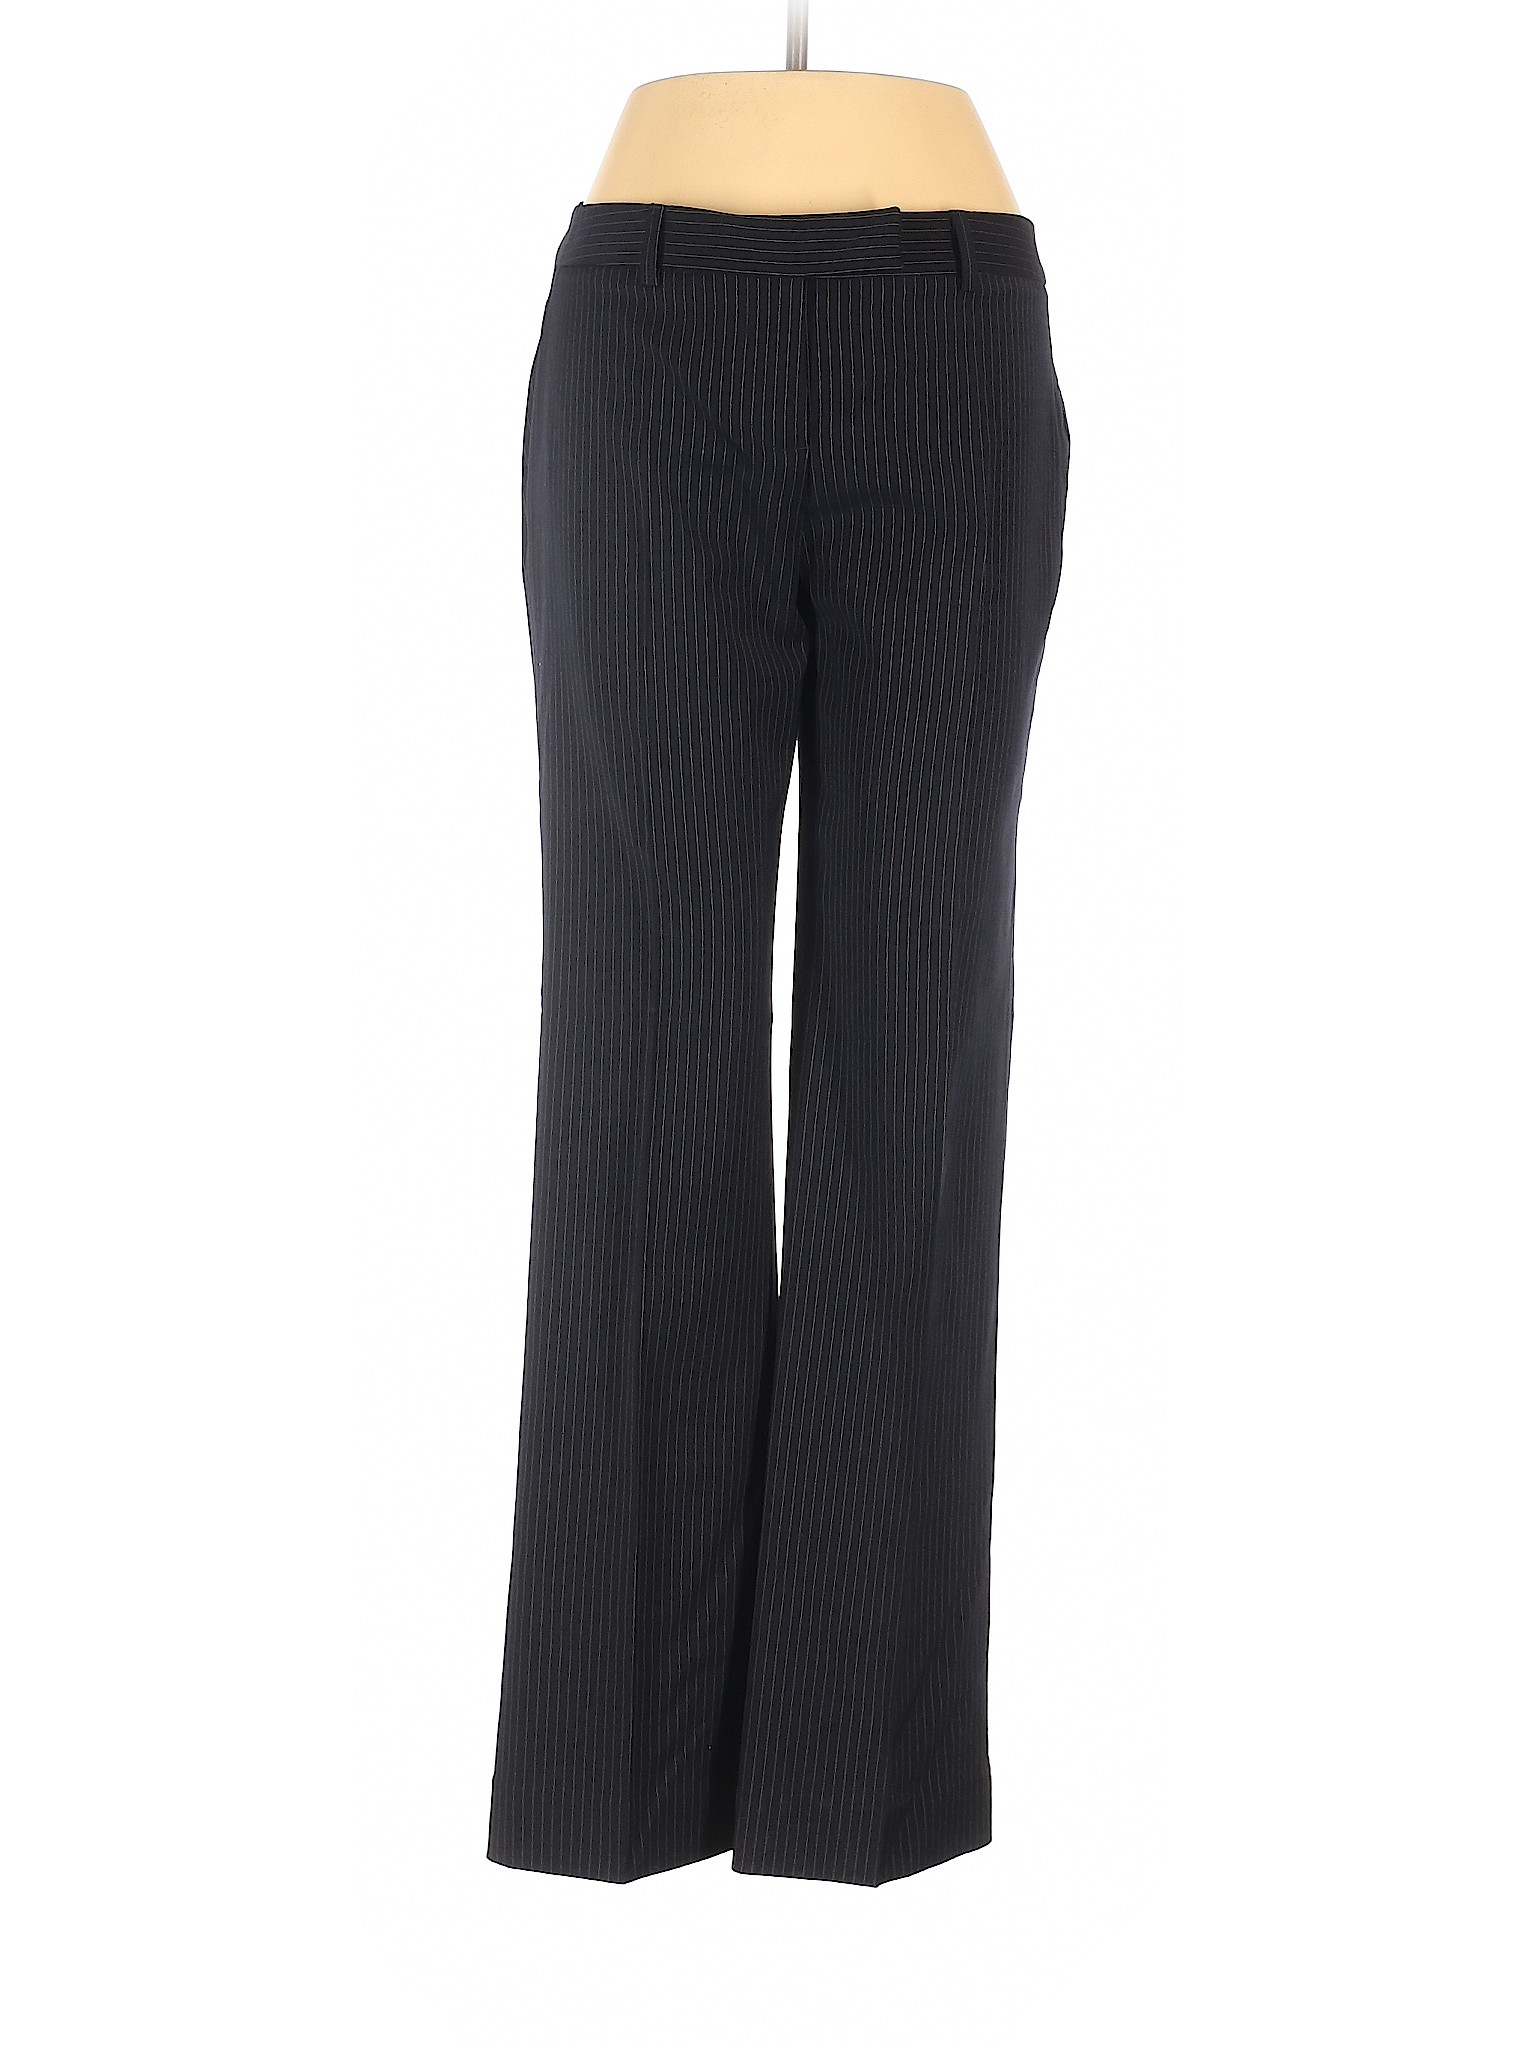 Hilfiger Collection Women Black Wool Pants 4 | eBay